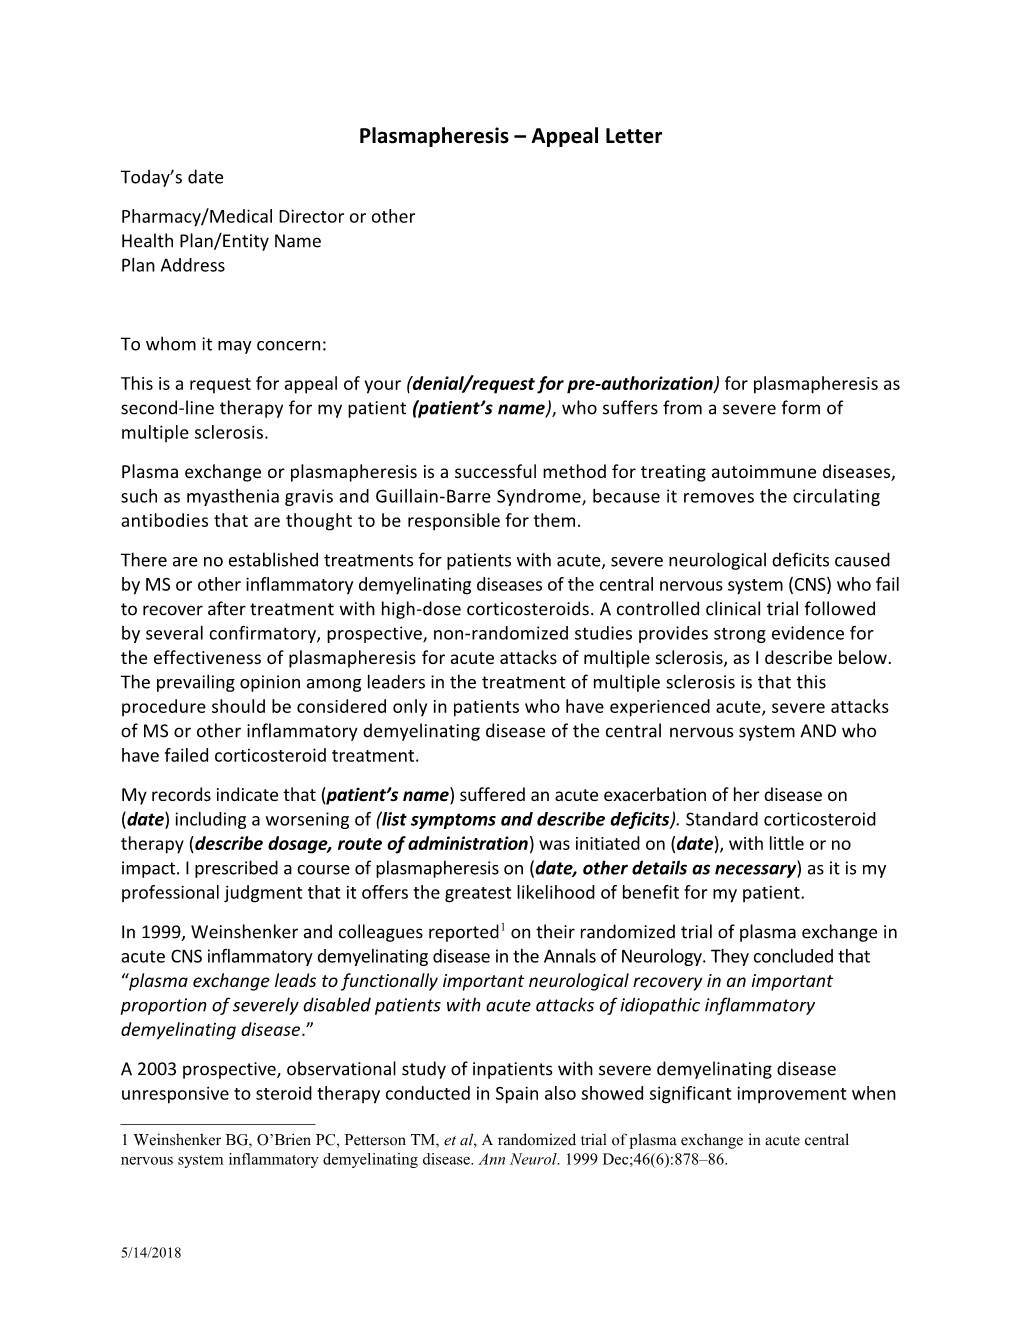 Plasmapheresis Appeal Letter